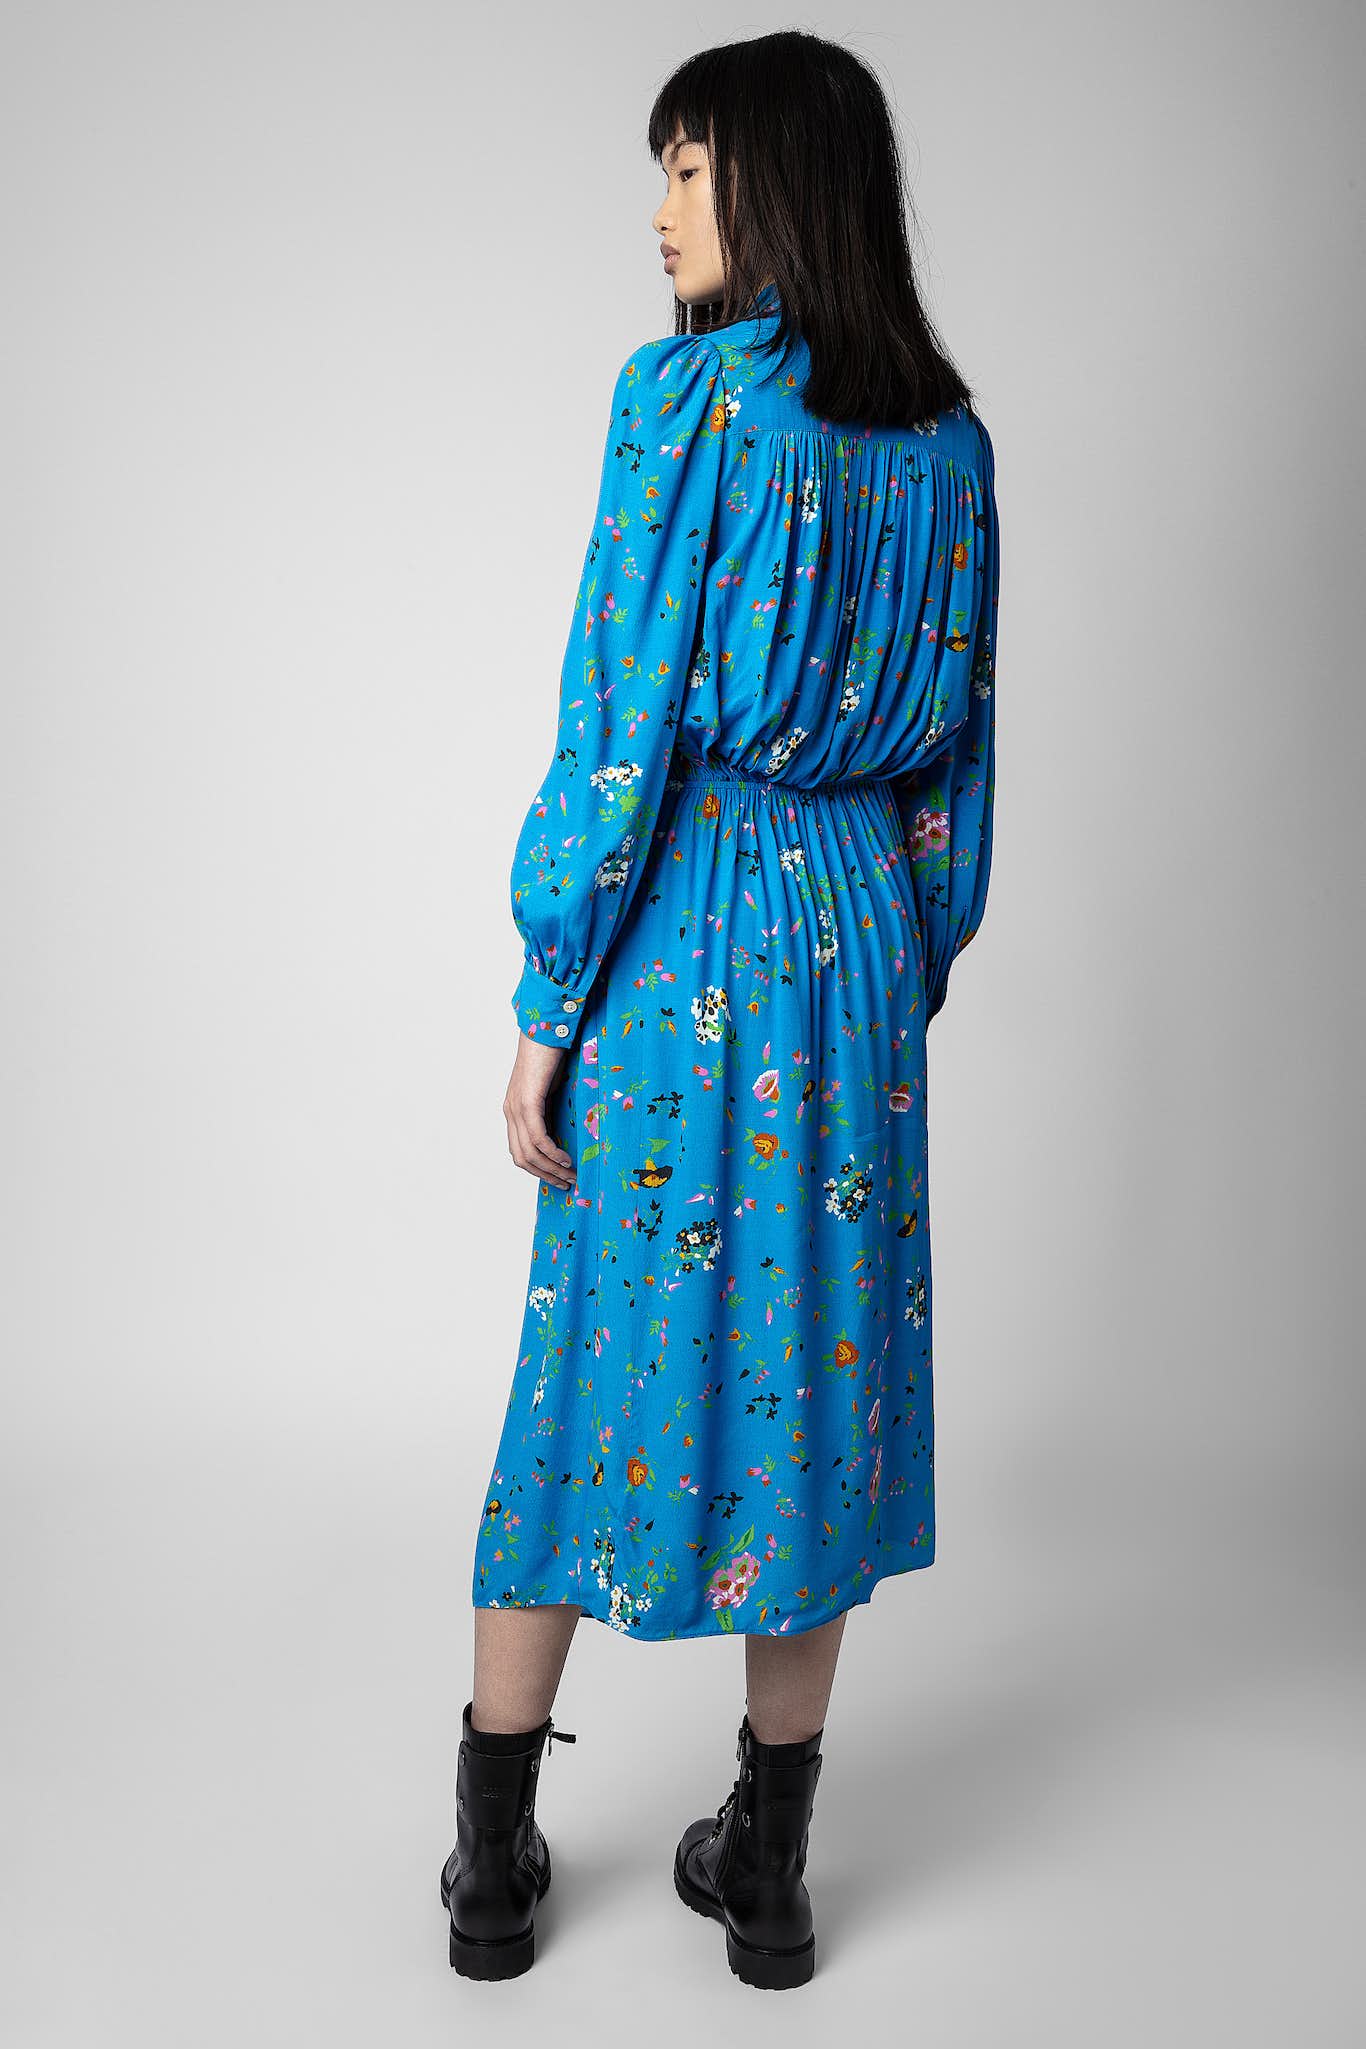 Ruselia crepe dress, turquoise print